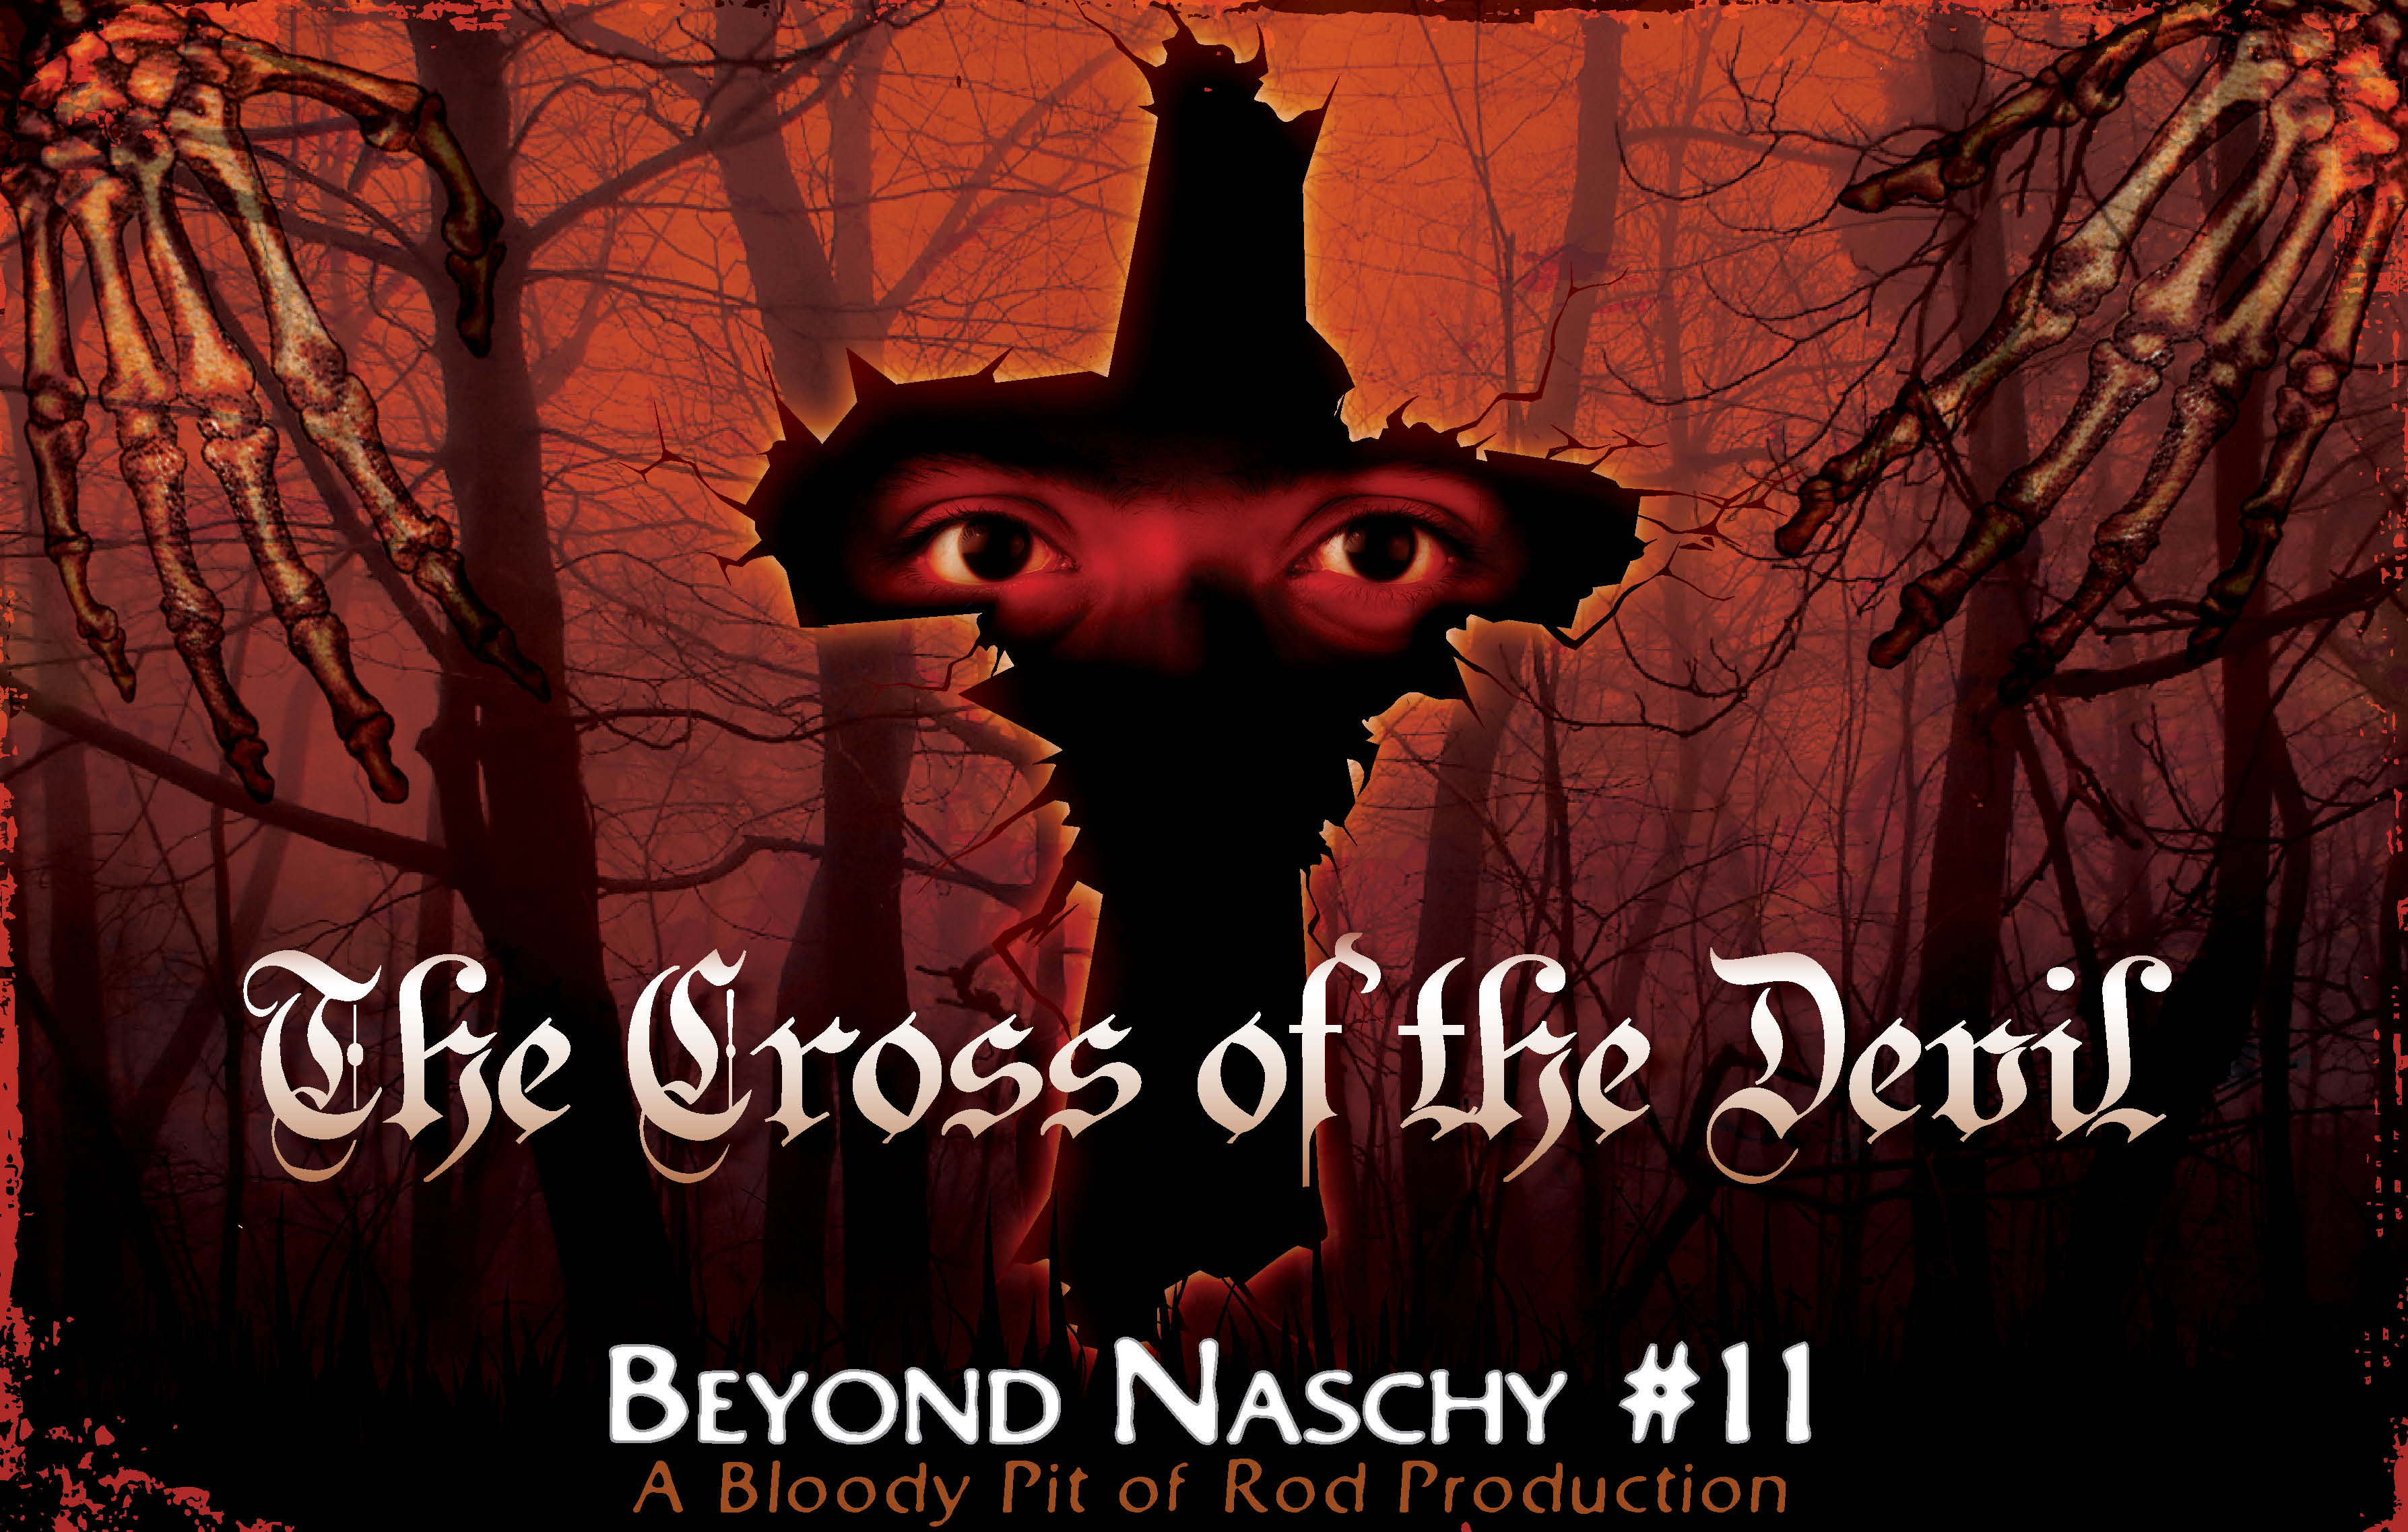 Beyond Naschy #11 - CROSS OF THE DEVIL  (1975)